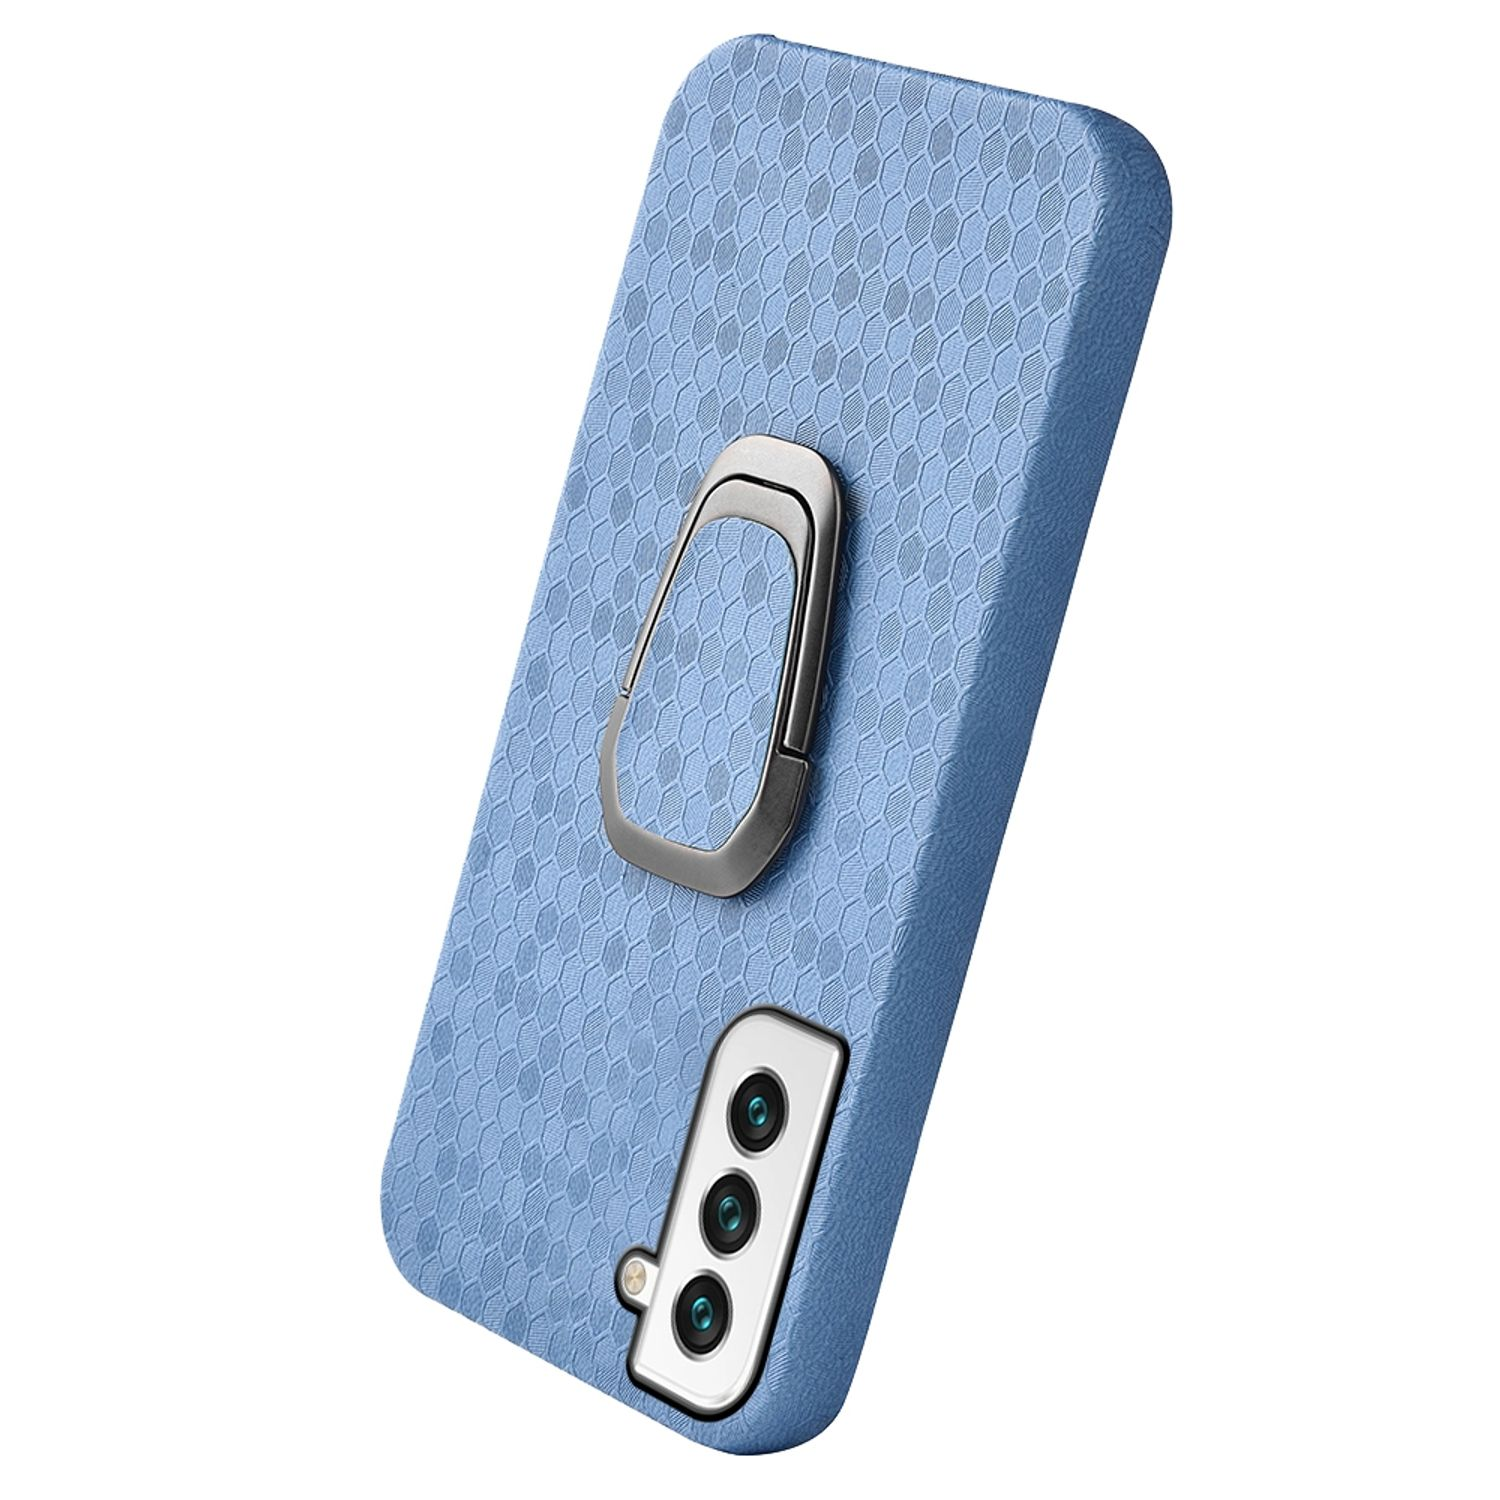 KÖNIG DESIGN Case, Blau S22 Baby Galaxy 5G, Samsung, Backcover